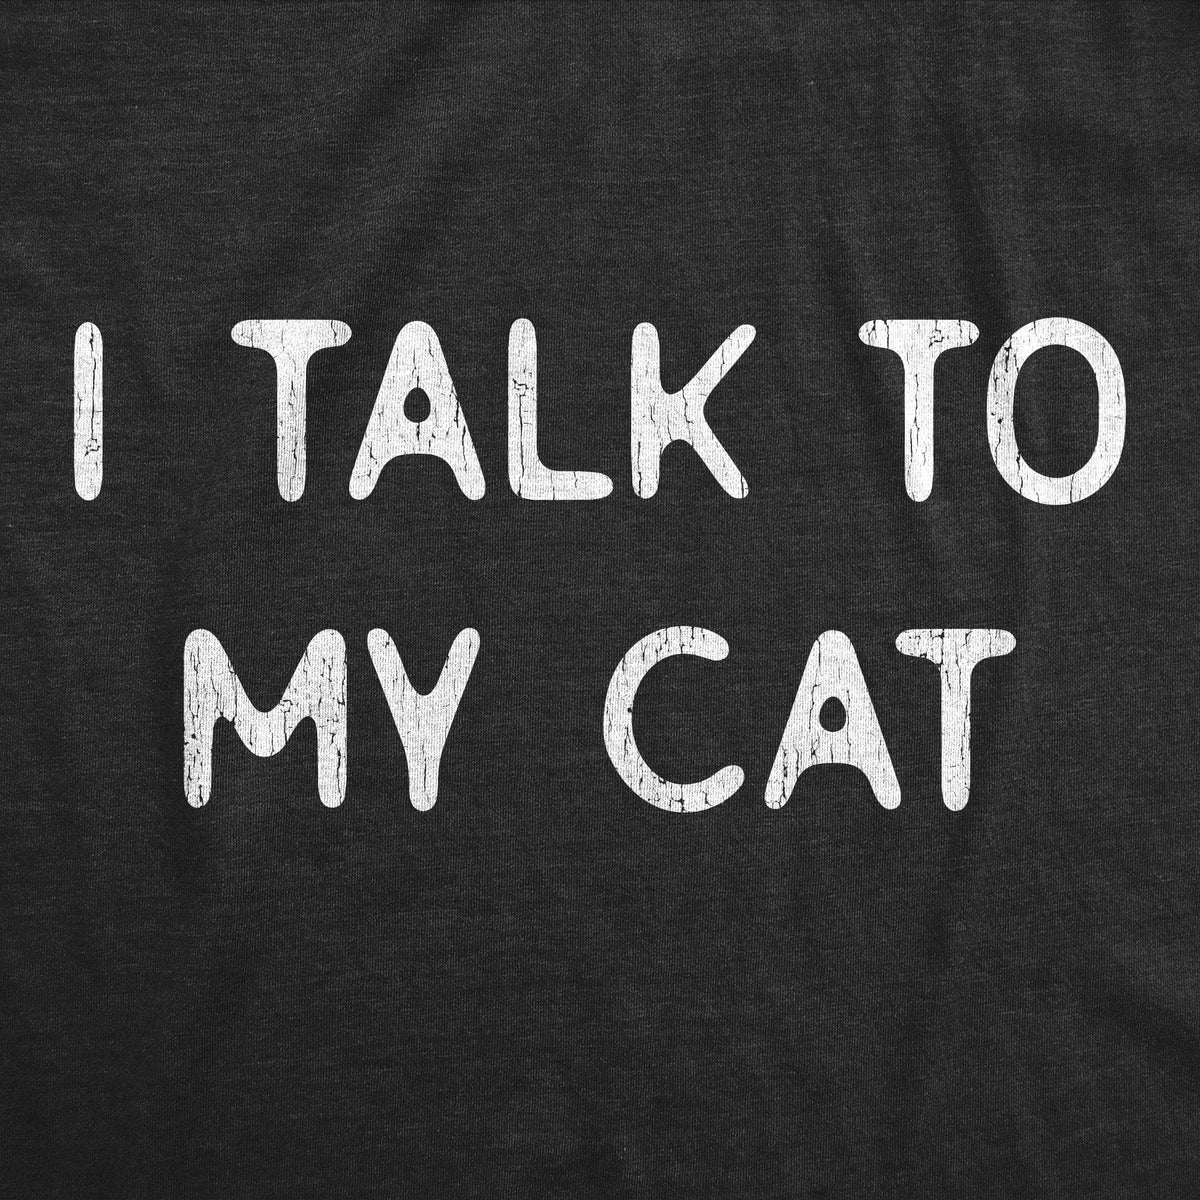 I Talk To My Cat Men&#39;s Tshirt - Crazy Dog T-Shirts